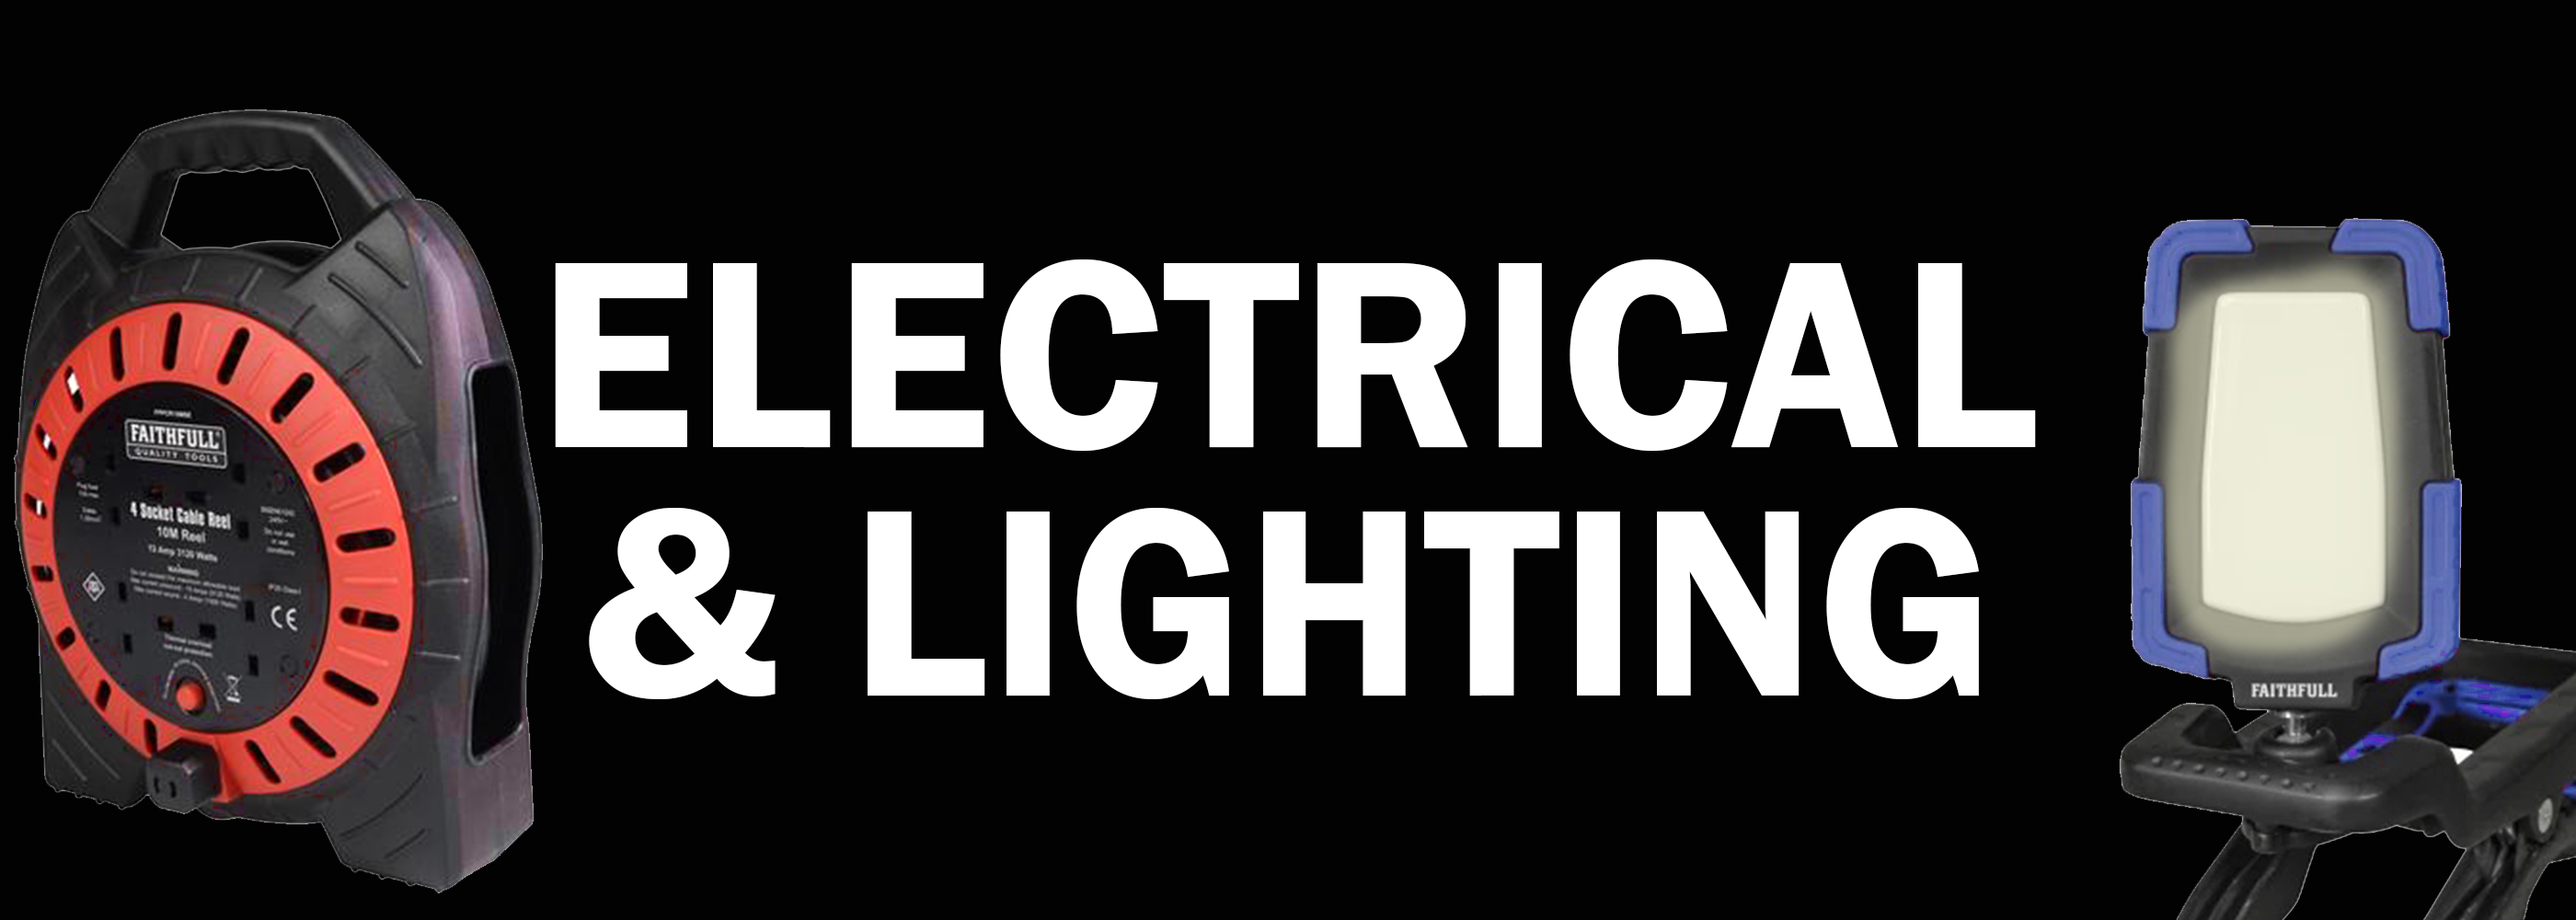 ELECTRICAL & LIGHTING